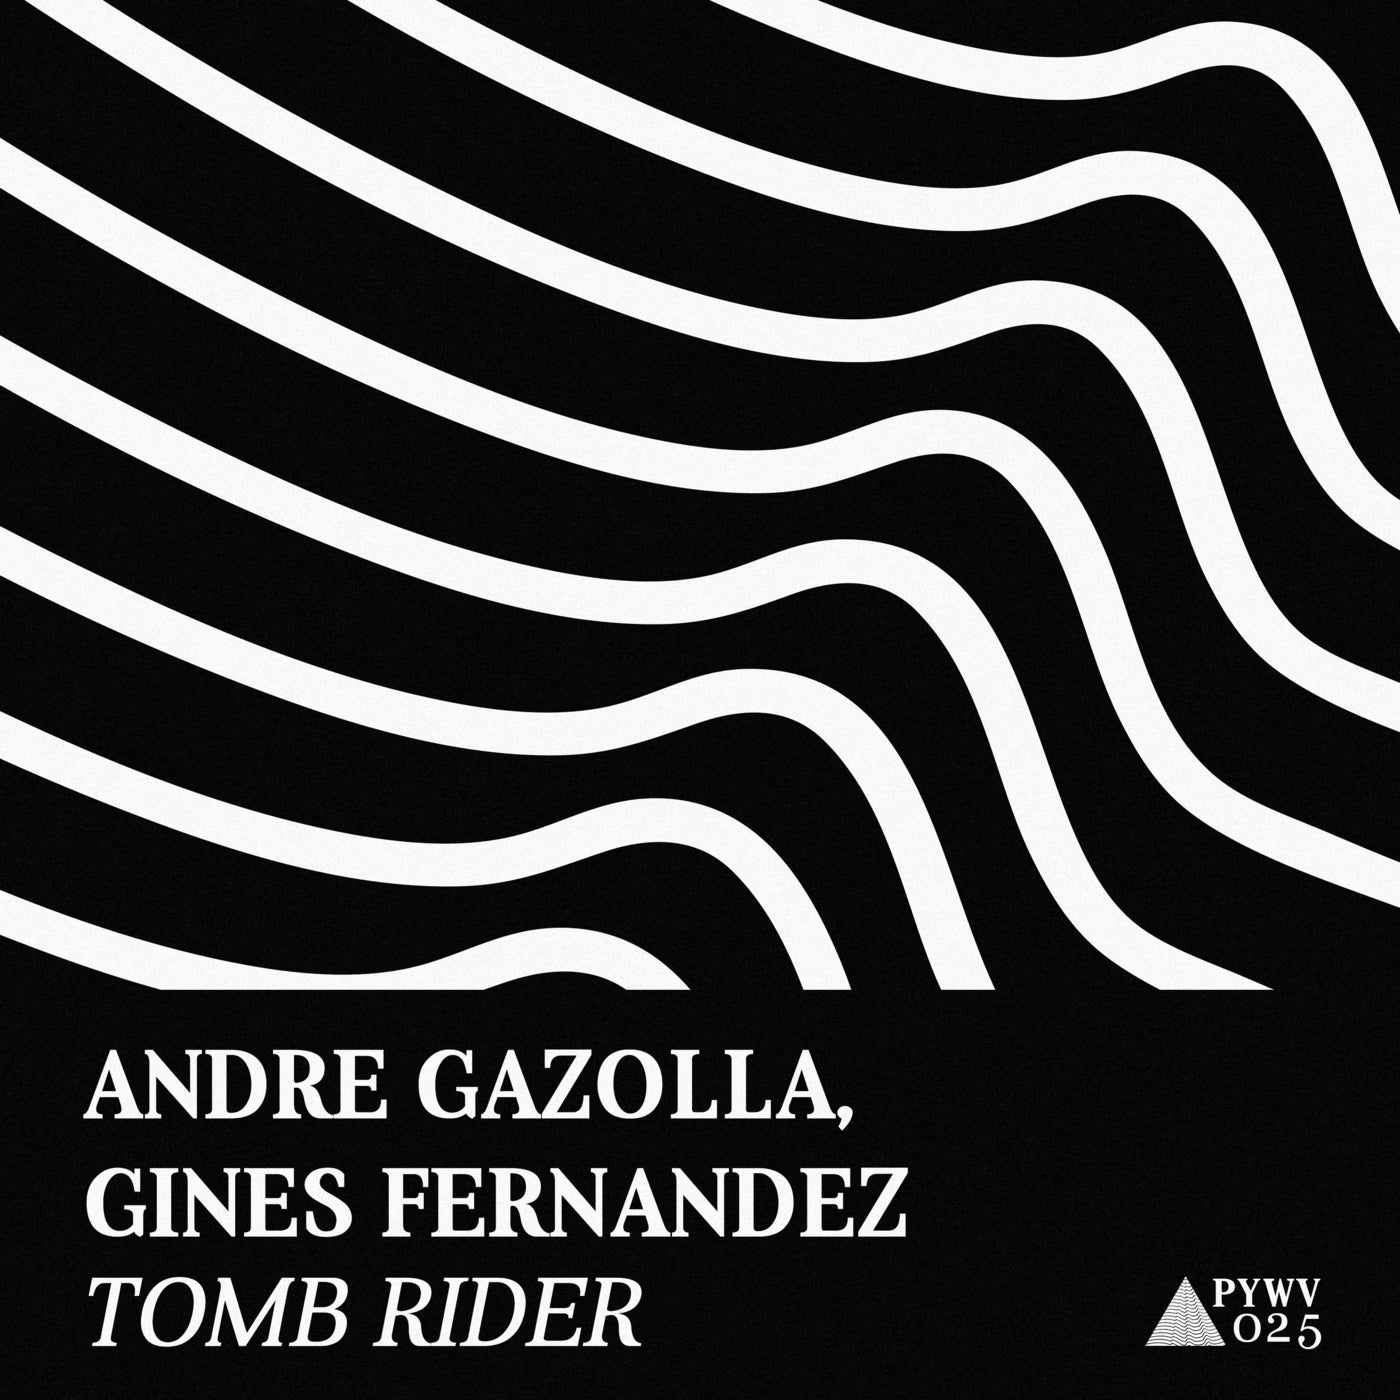 Andre Gazolla, Gines Fernandez – Tomb Rider [PYWV025]